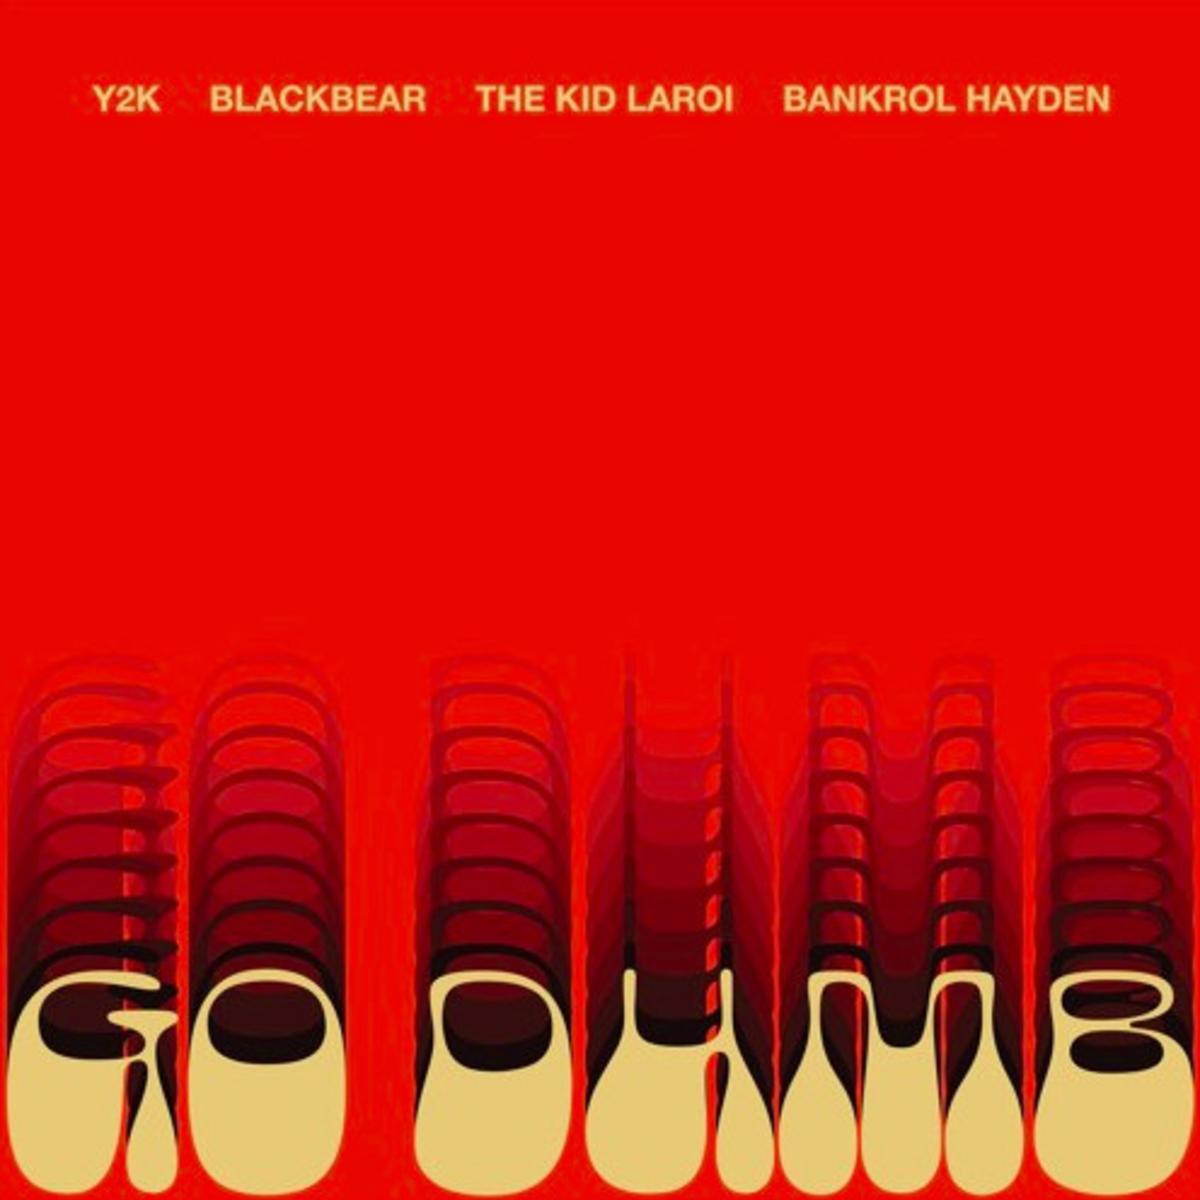 Y2k Go Dumb Ft Blackbear The Kid Laroi Bankrol Hayden Audio Lyrics Visualizer Download Mp3 Music Lyrics - the dumbest song roblox id